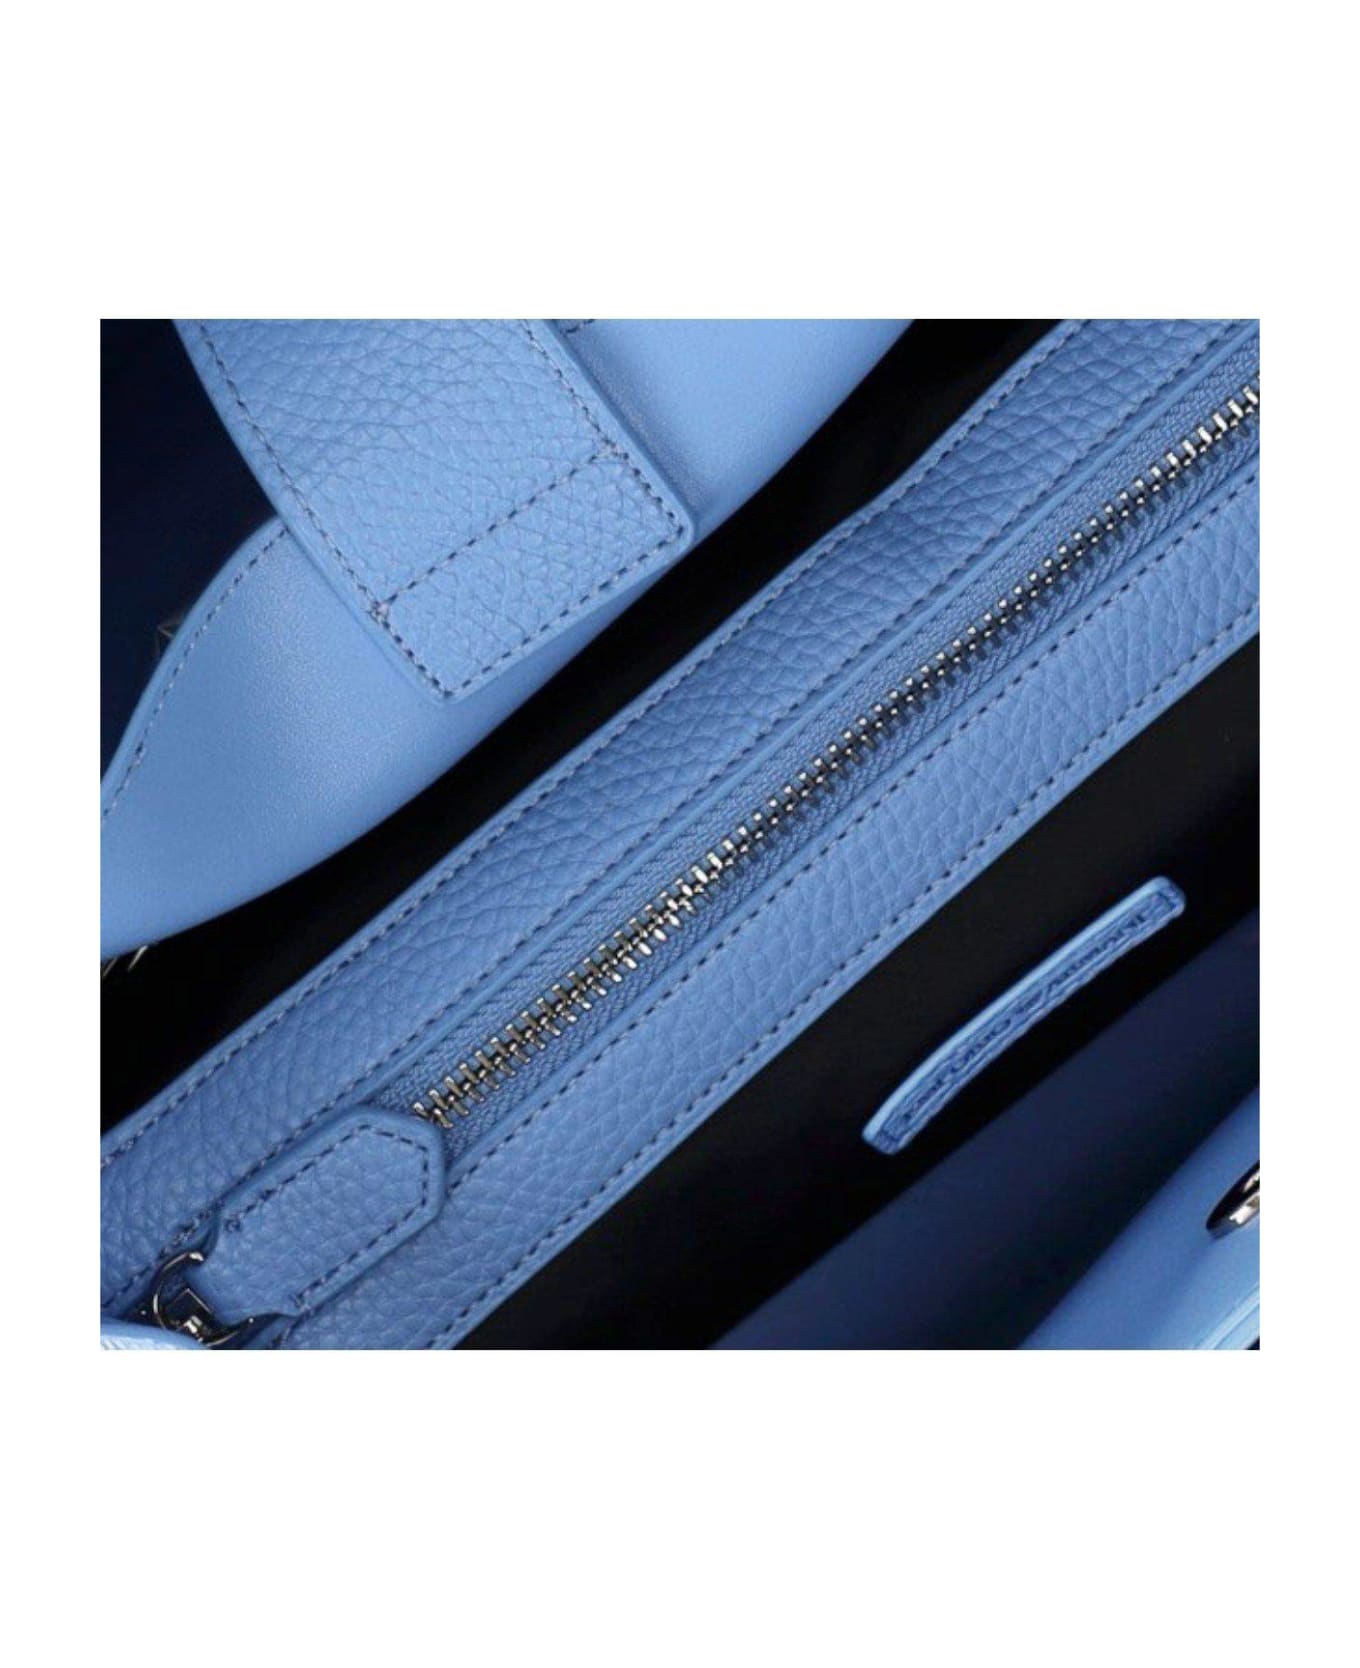 Emporio Armani Logo Printed Tote Bag - Clear Blue